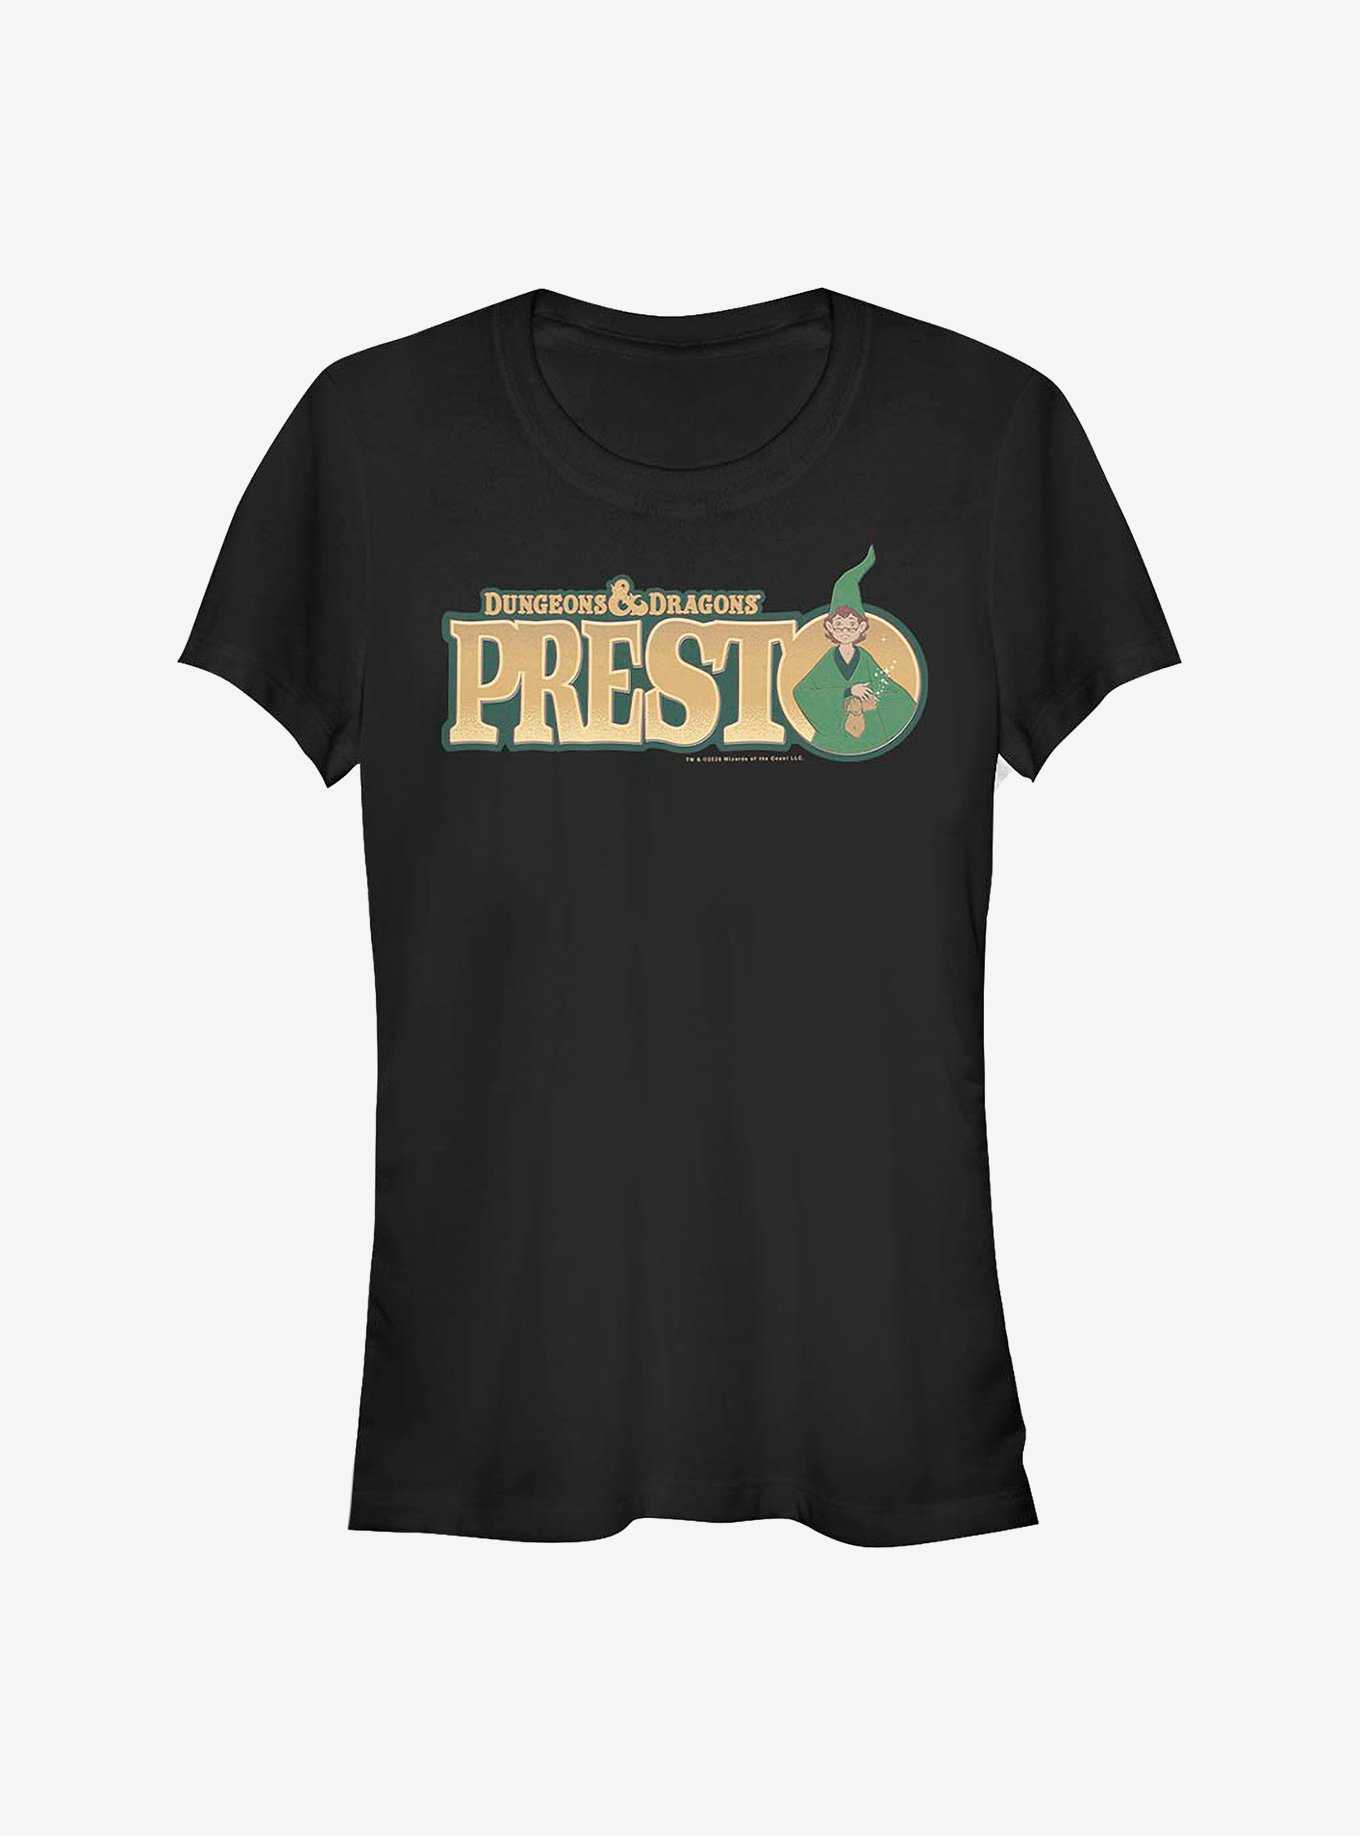 Dungeons & Dragons Prest Green Girls T-Shirt, , hi-res